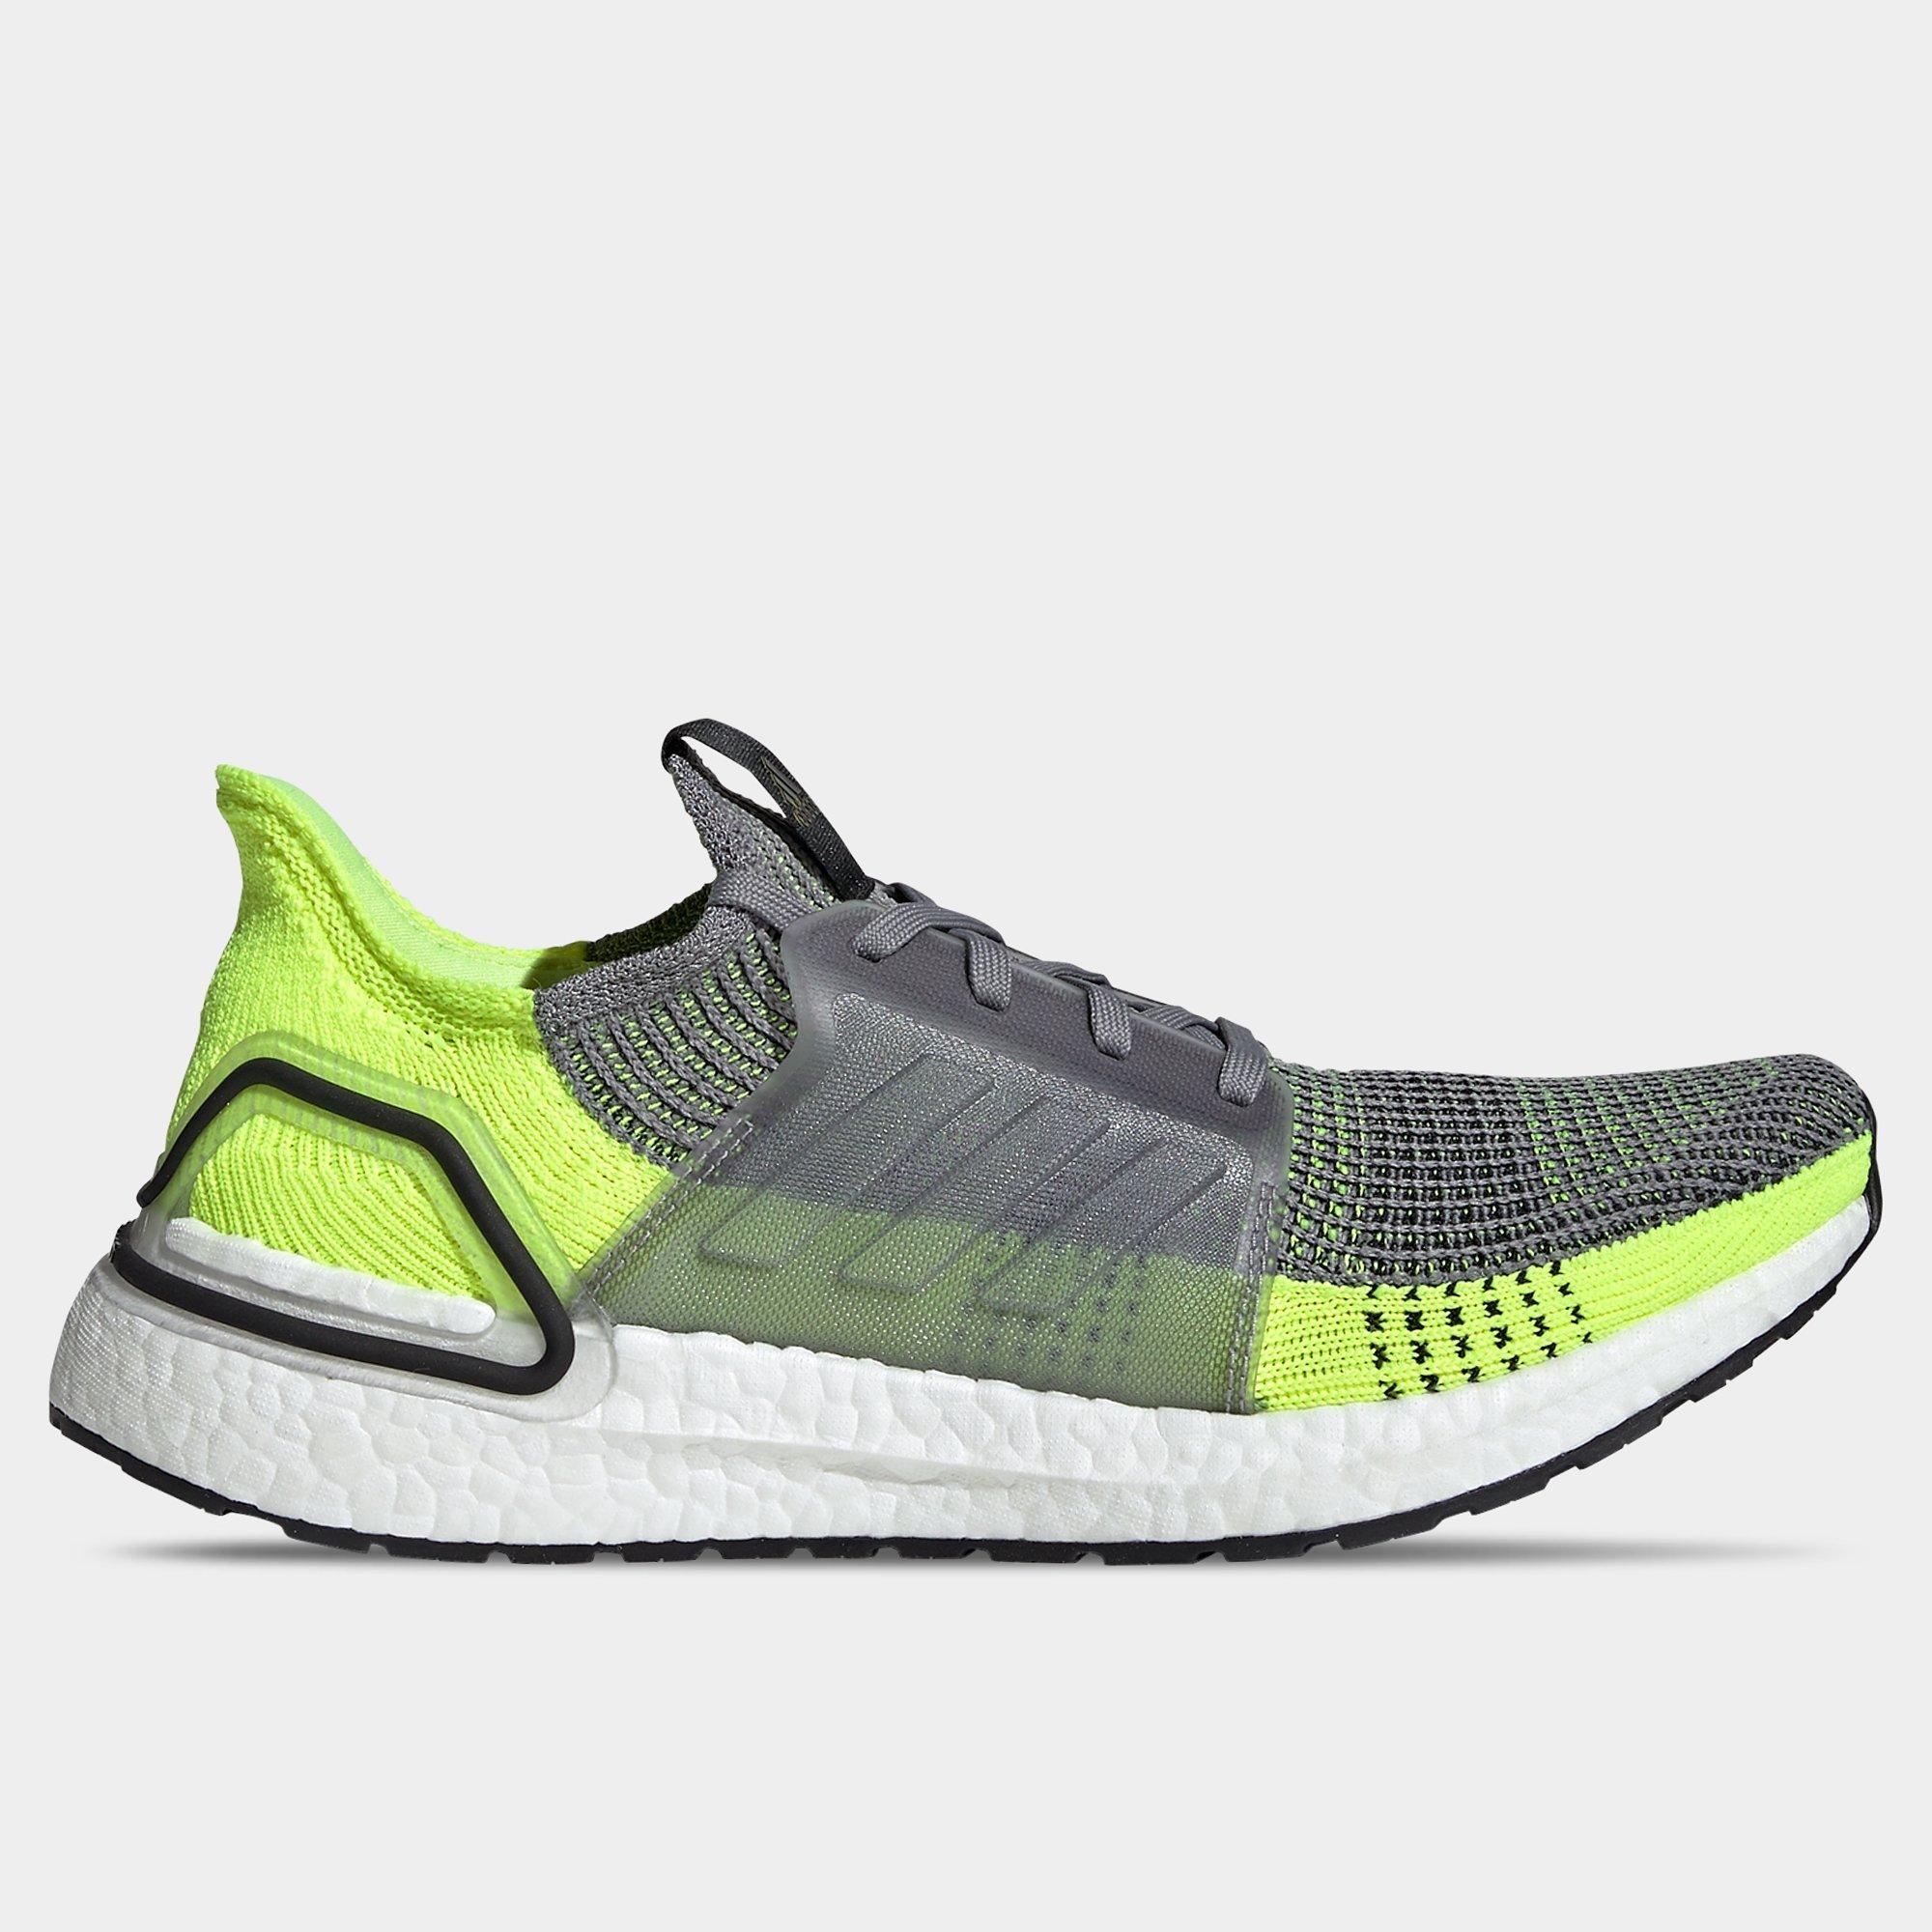 finish line adidas running shoes